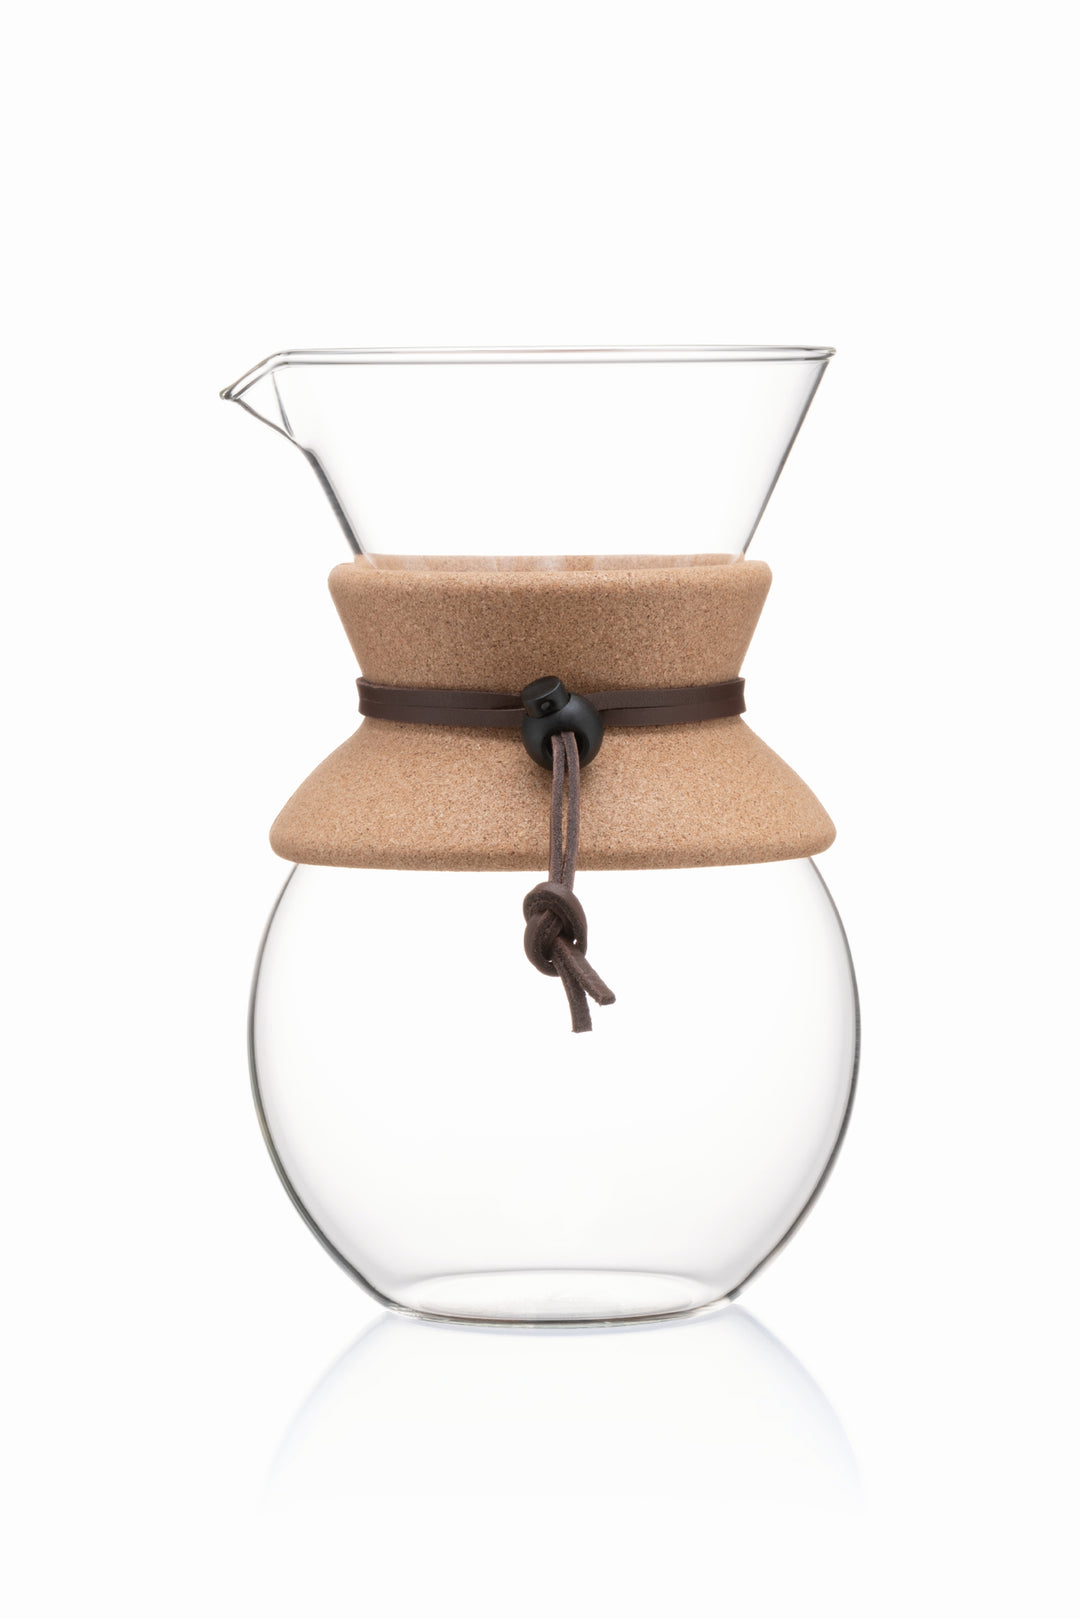 Bodum - Pour Over Coffee Maker - Cork